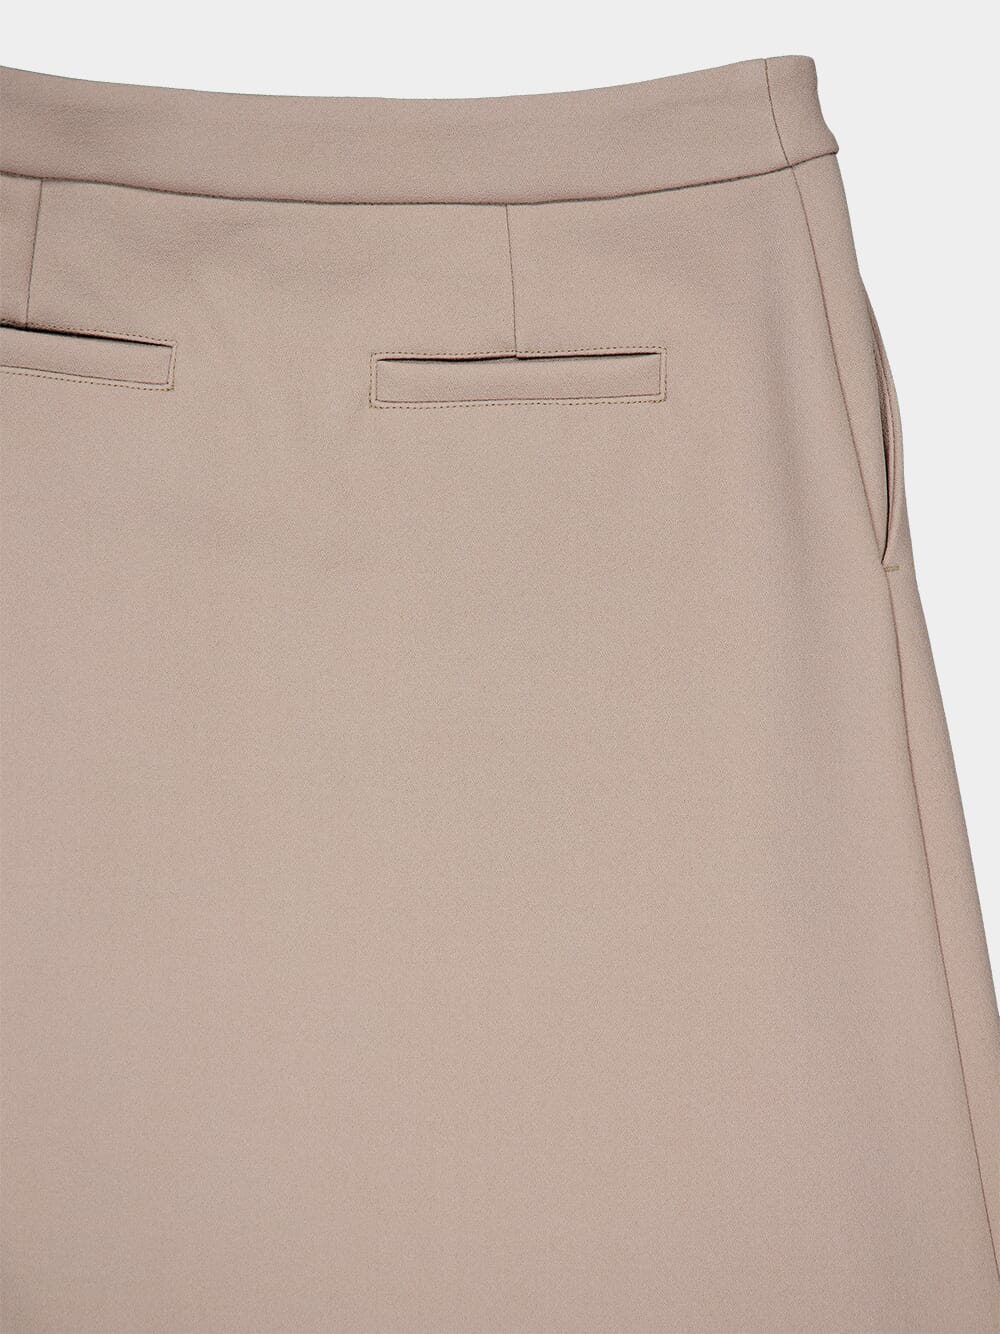 Belted Wool Crepe Midi Skirt